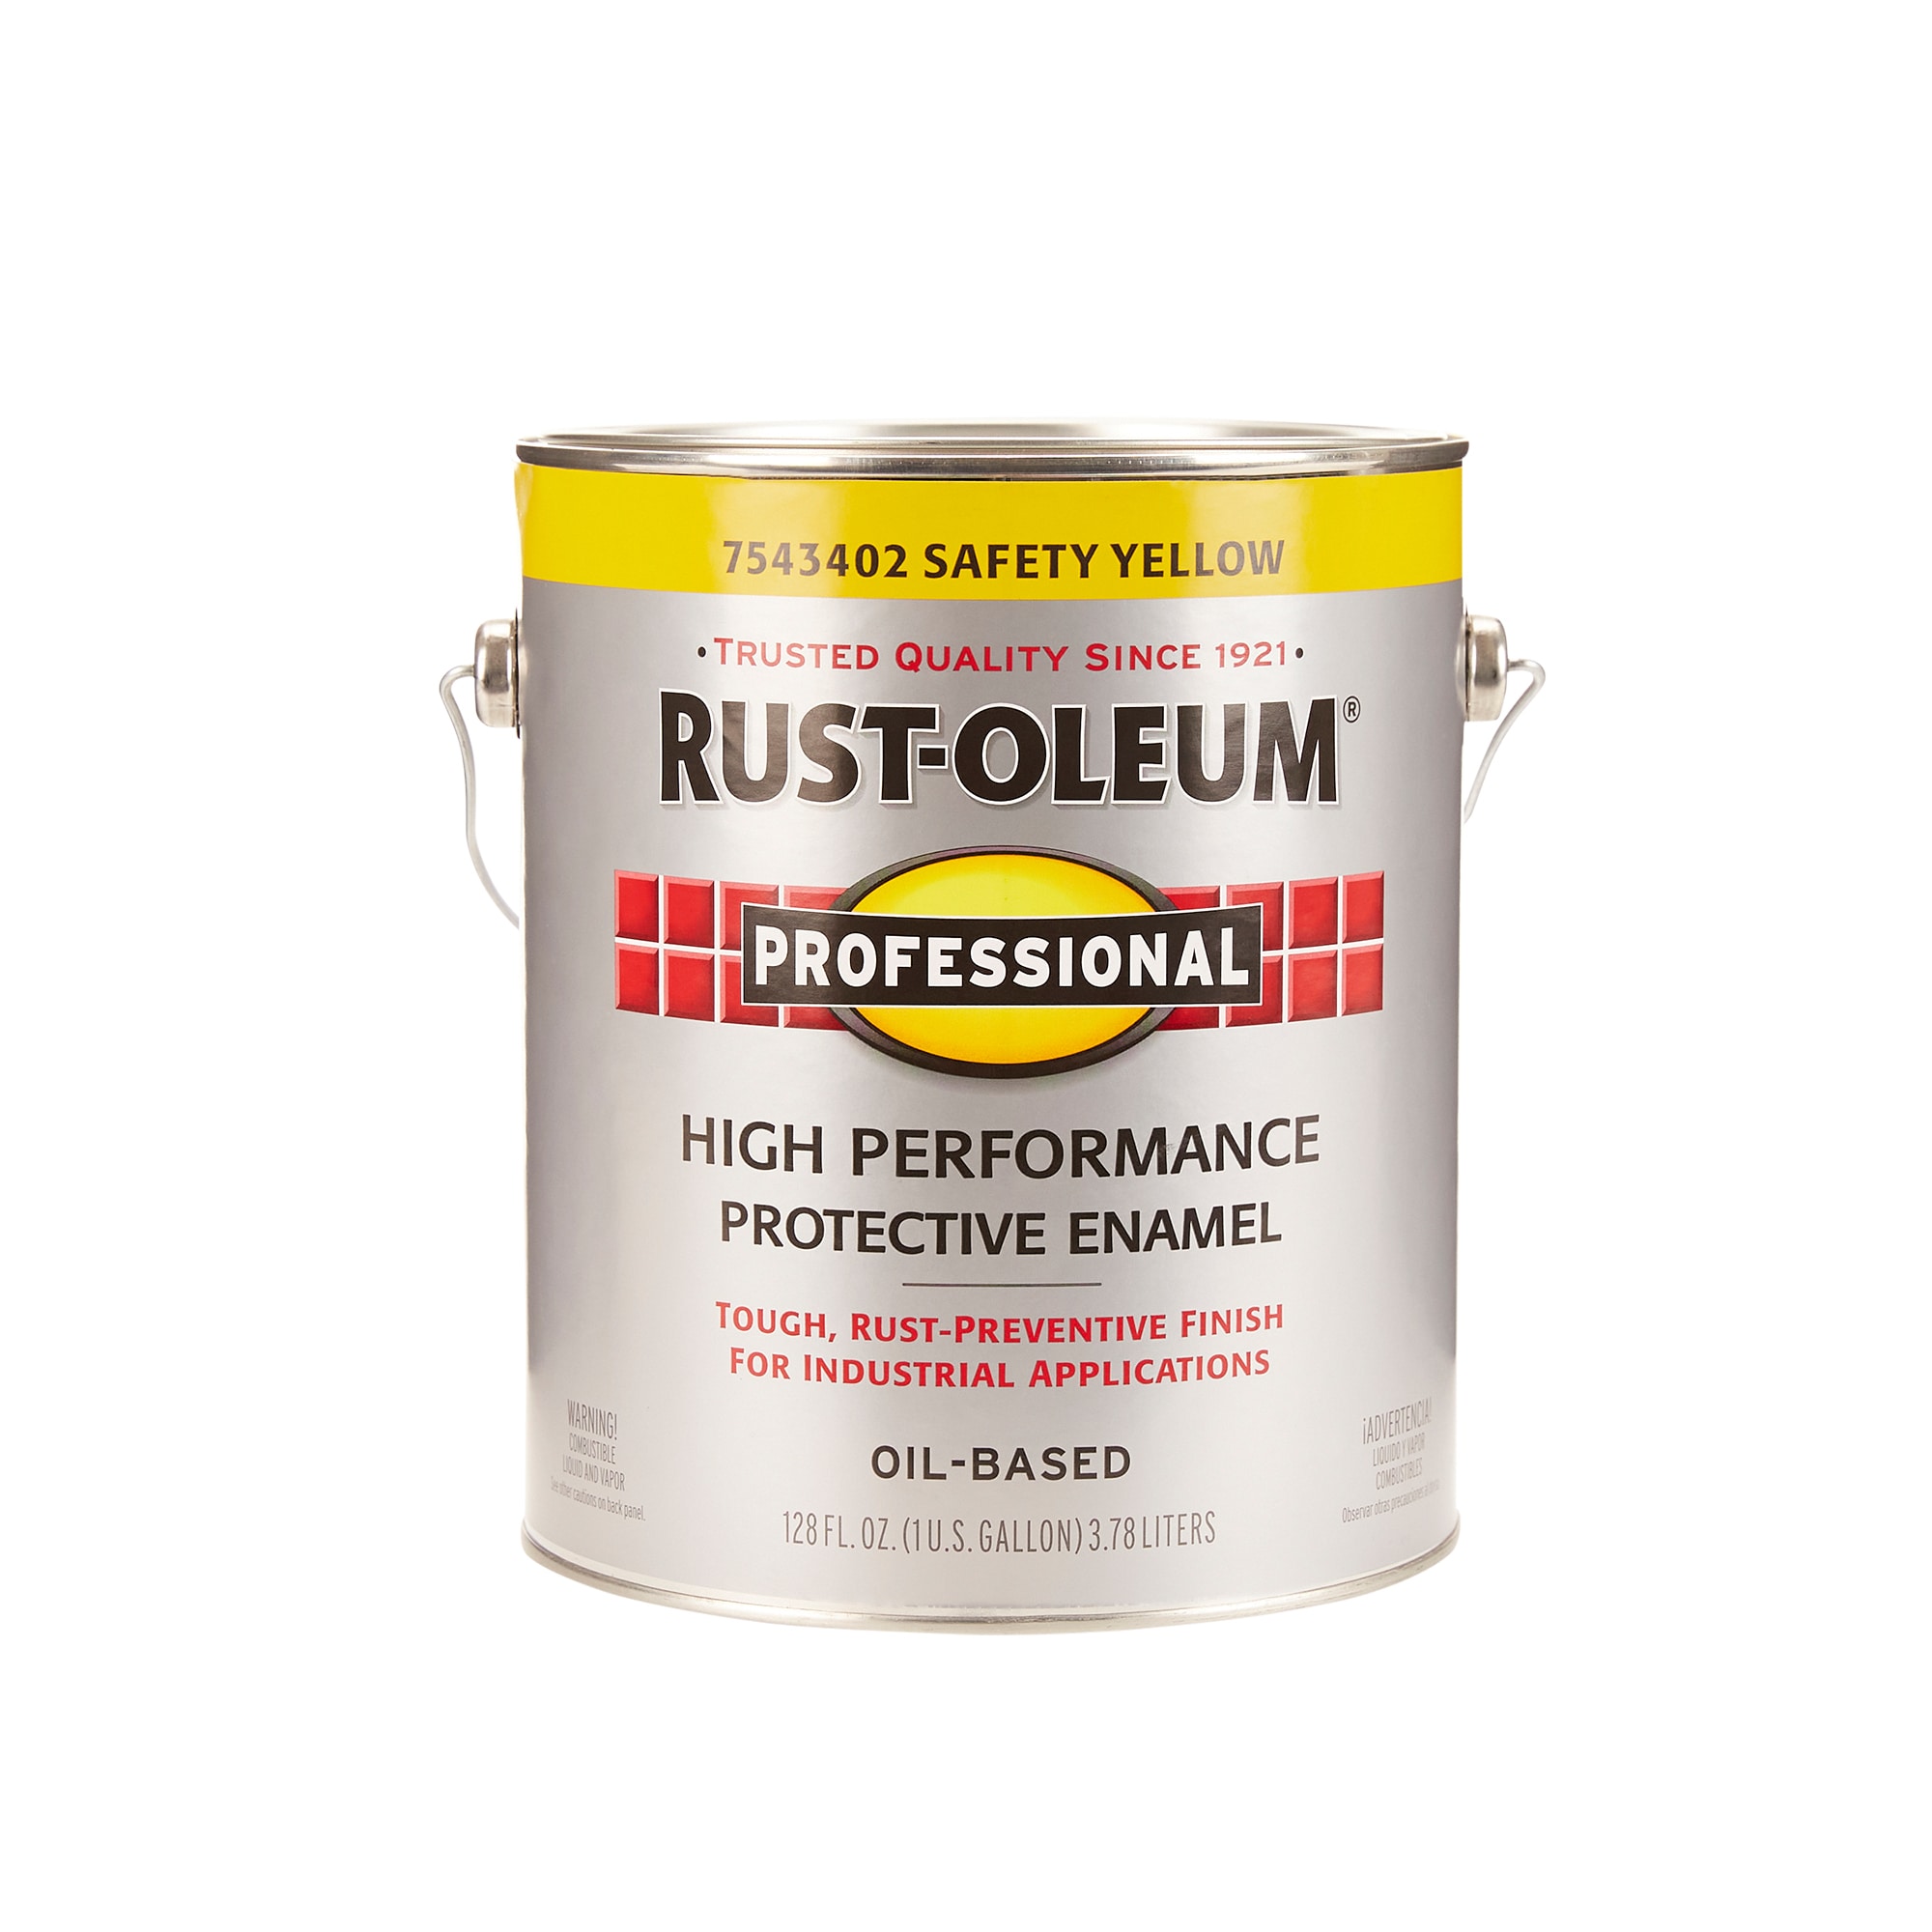 Rust-Oleum 280163-2PK Farm & Implement Enamel Paint, Quart, Caterpillar Yellow, 32 fl oz (Pack of 2)